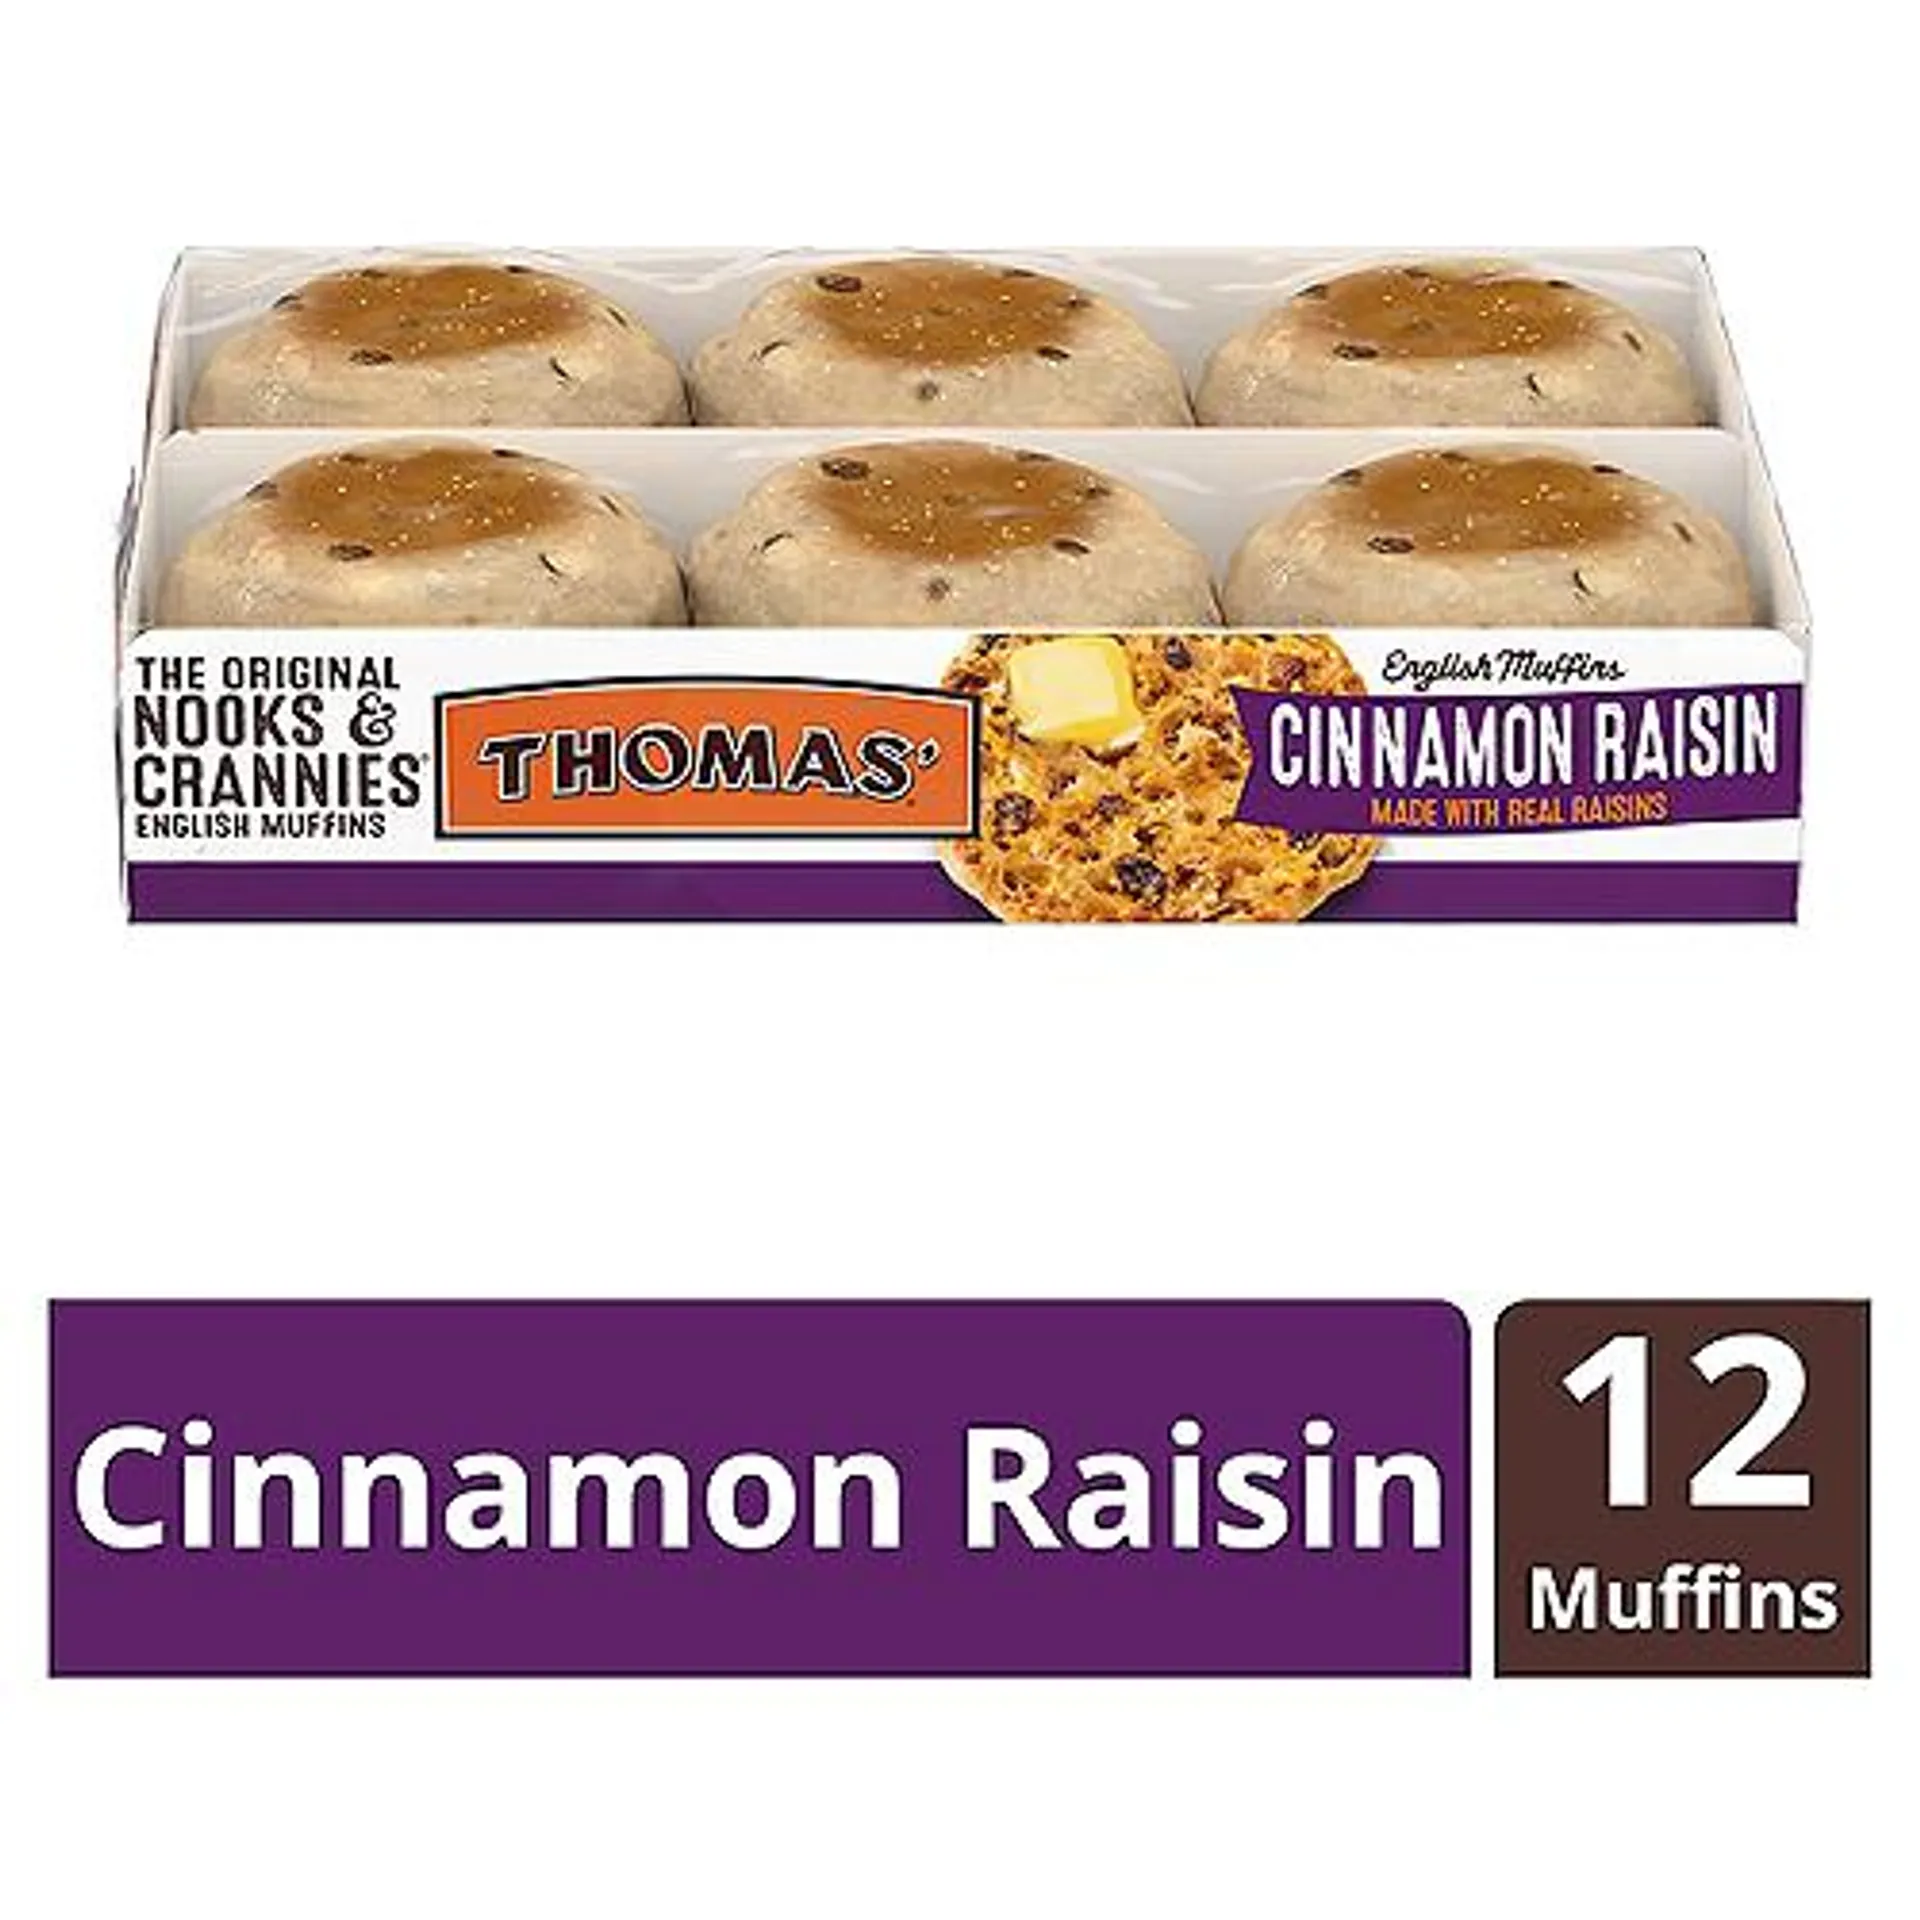 Thomas' Cinnamon Raisin English Muffins, 12 count, 26 oz